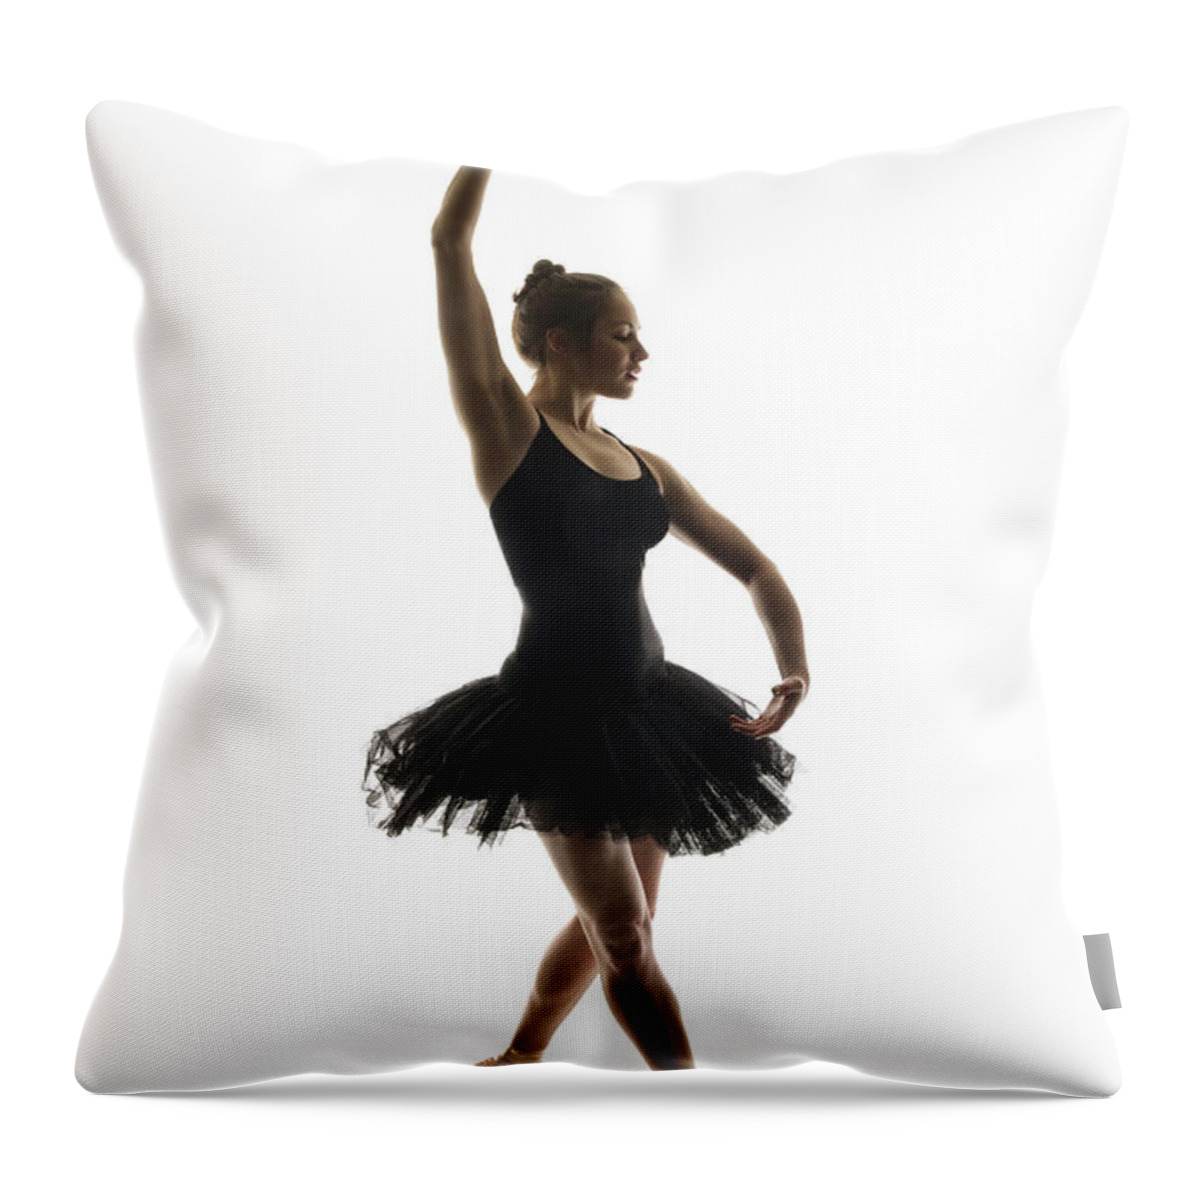 Ballet Dancer Throw Pillow featuring the photograph Ballerina In A Tutu Dancing En Pointe by Phil Payne Photography